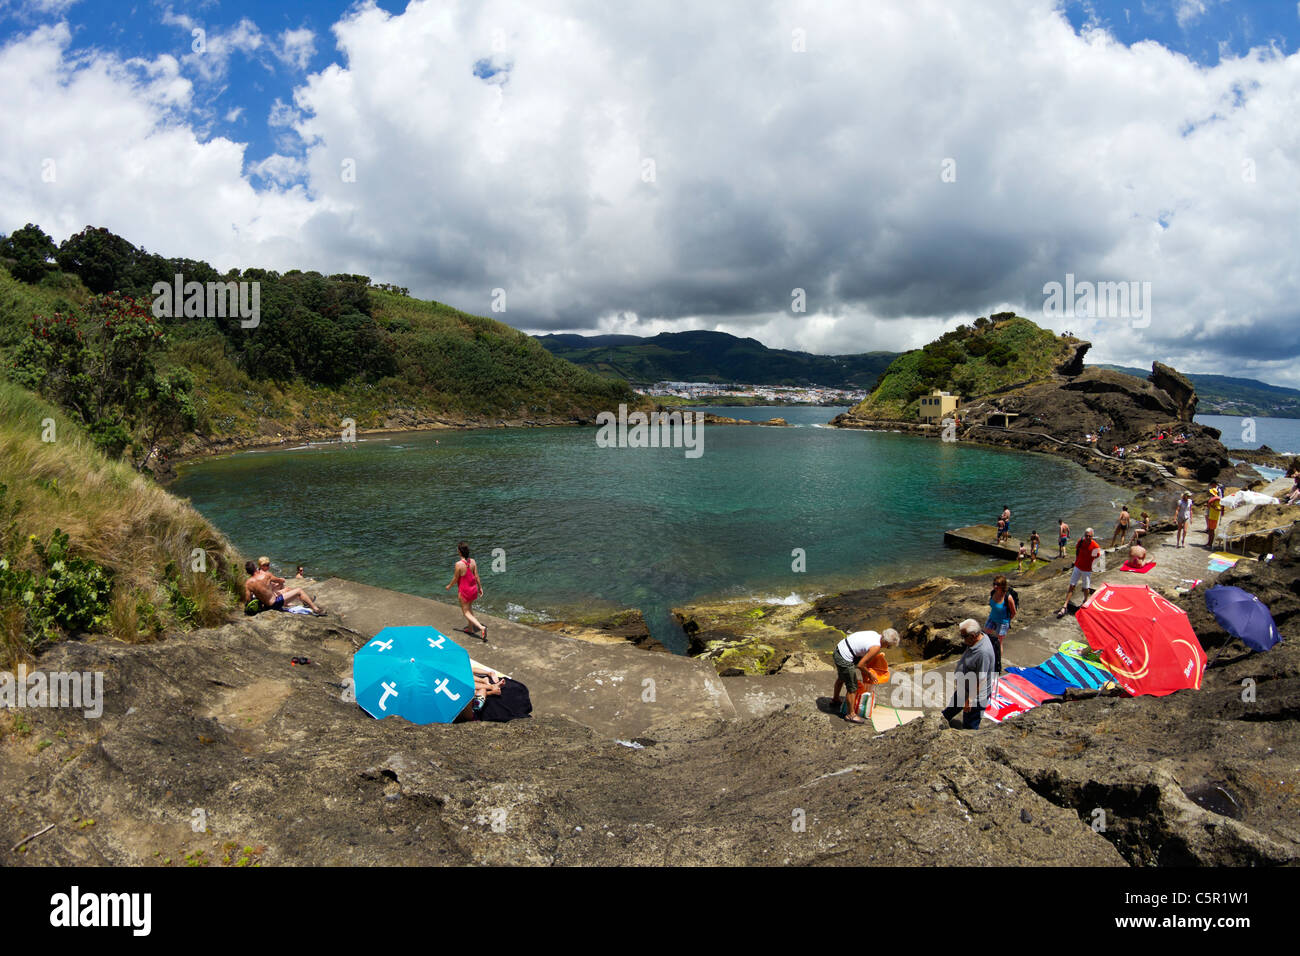 Ilhéu Vila Franca, a volcanic crater lagoon islet off the coast at Vila Franca do Campo, São Miguel island, Azores. Stock Photo